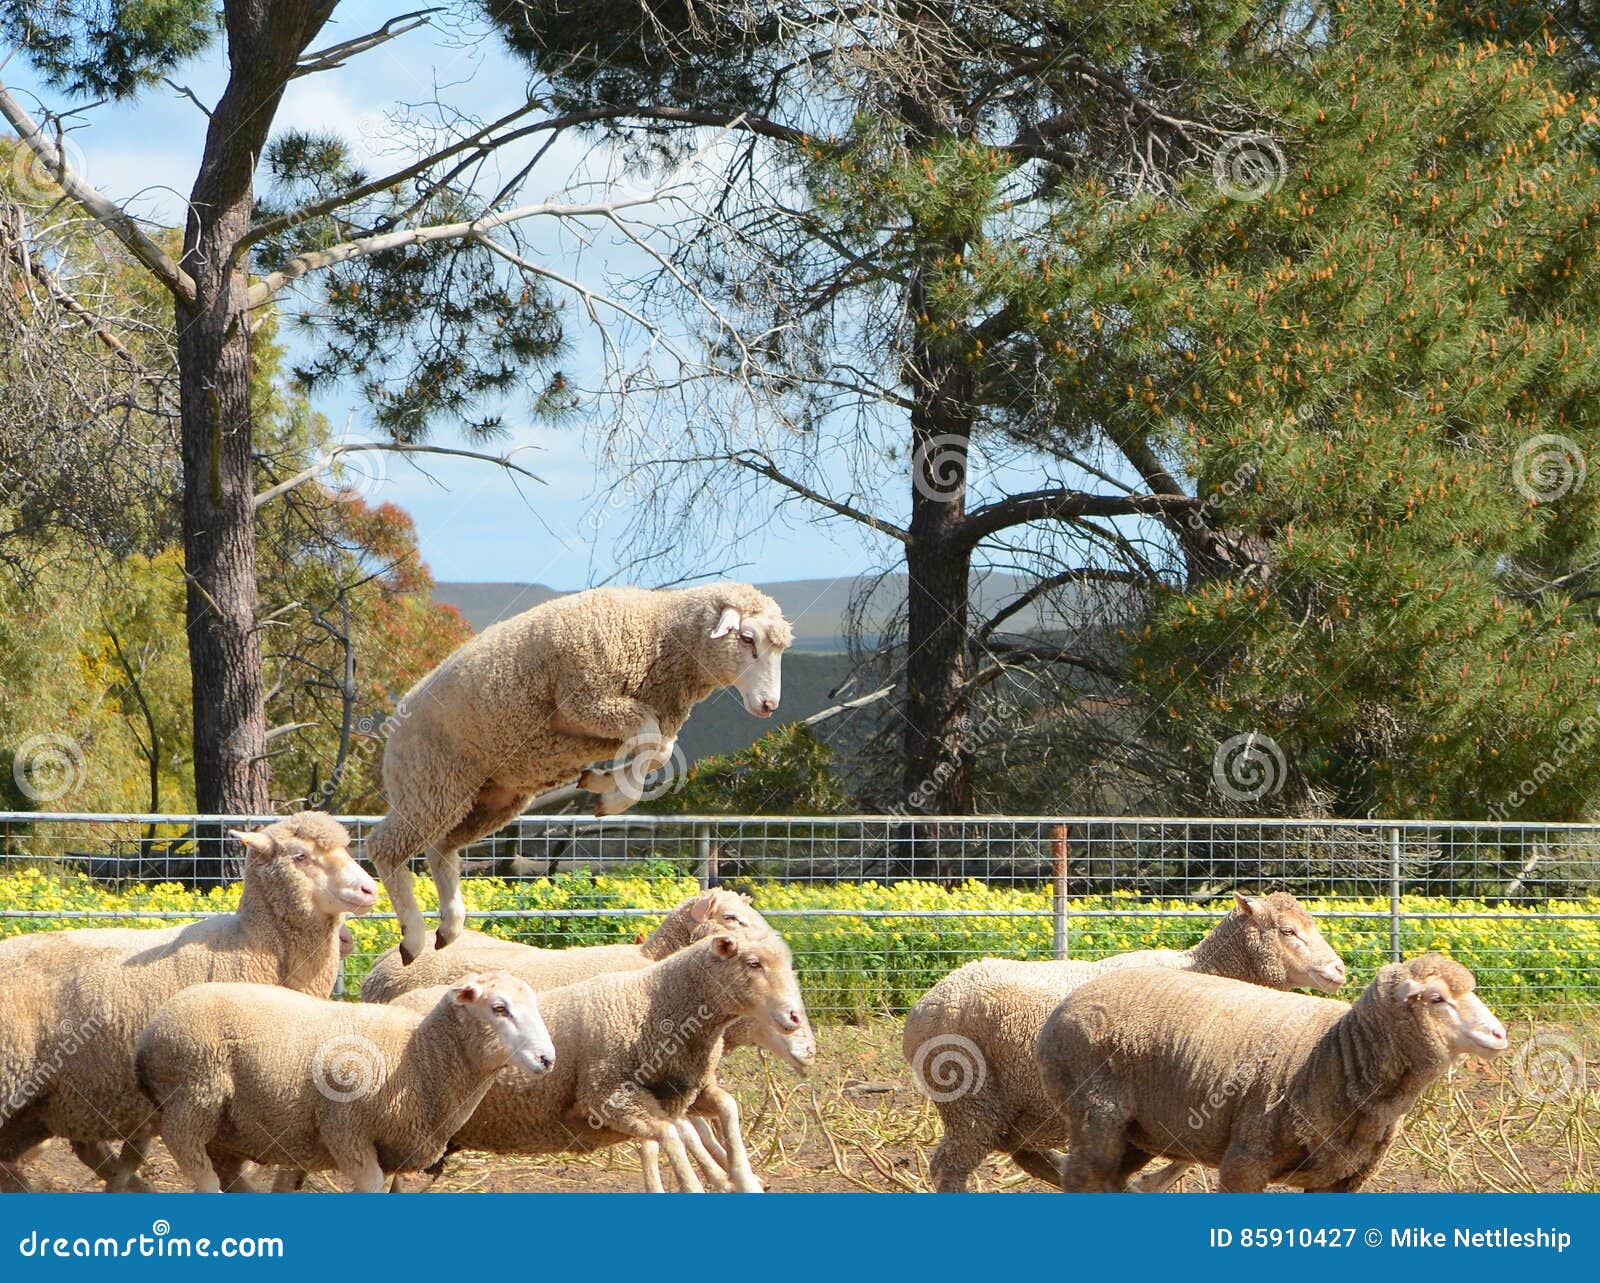 merino sheep on a farm in australia